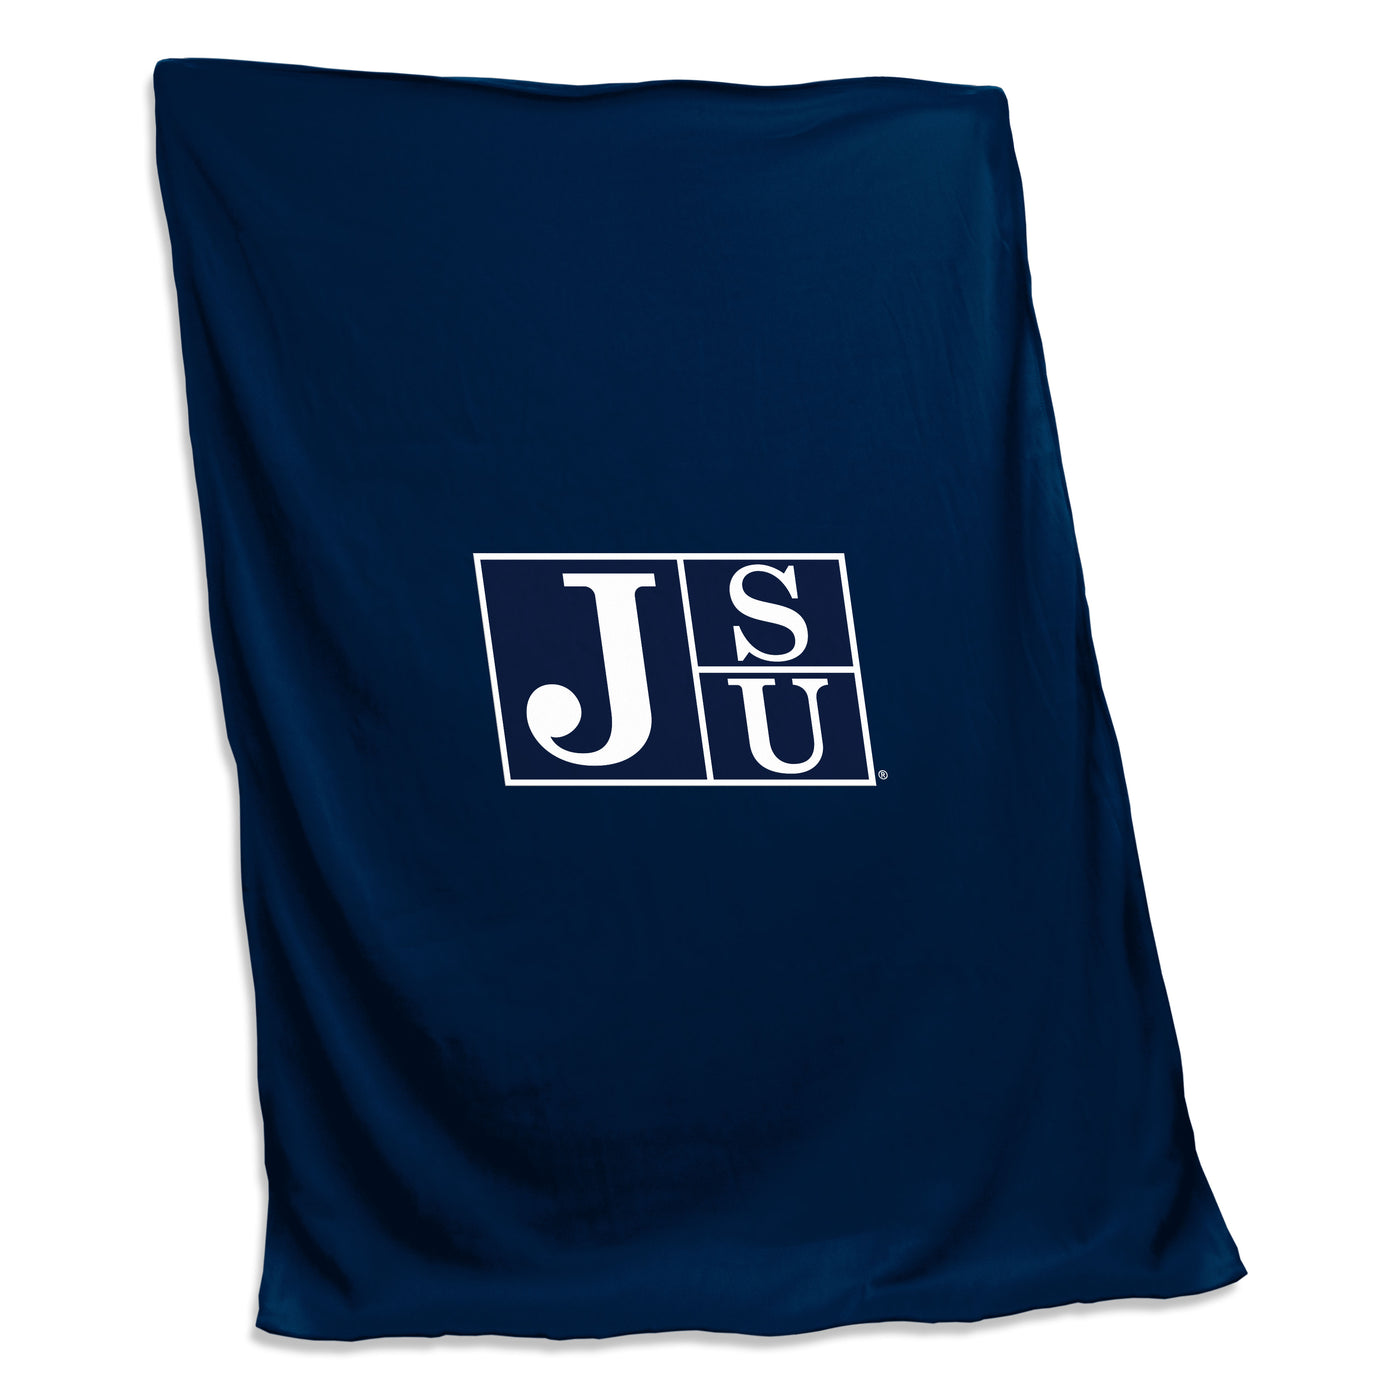 Jackson State Screened Sweatshirt Blanket